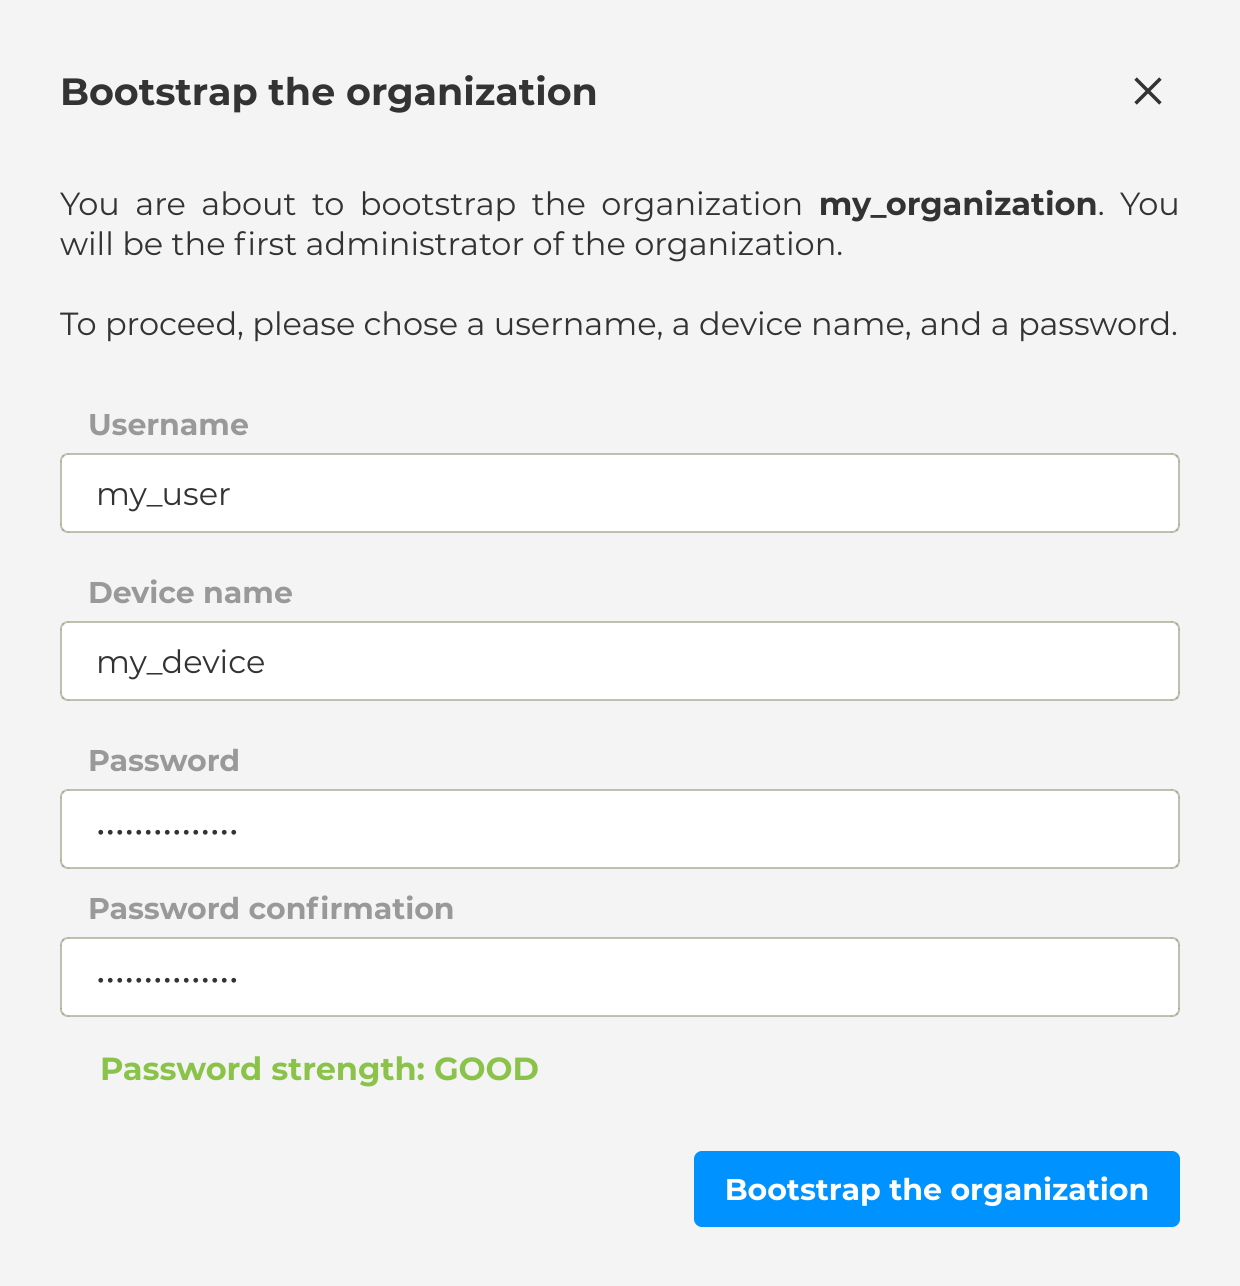 Organization bootstrap process